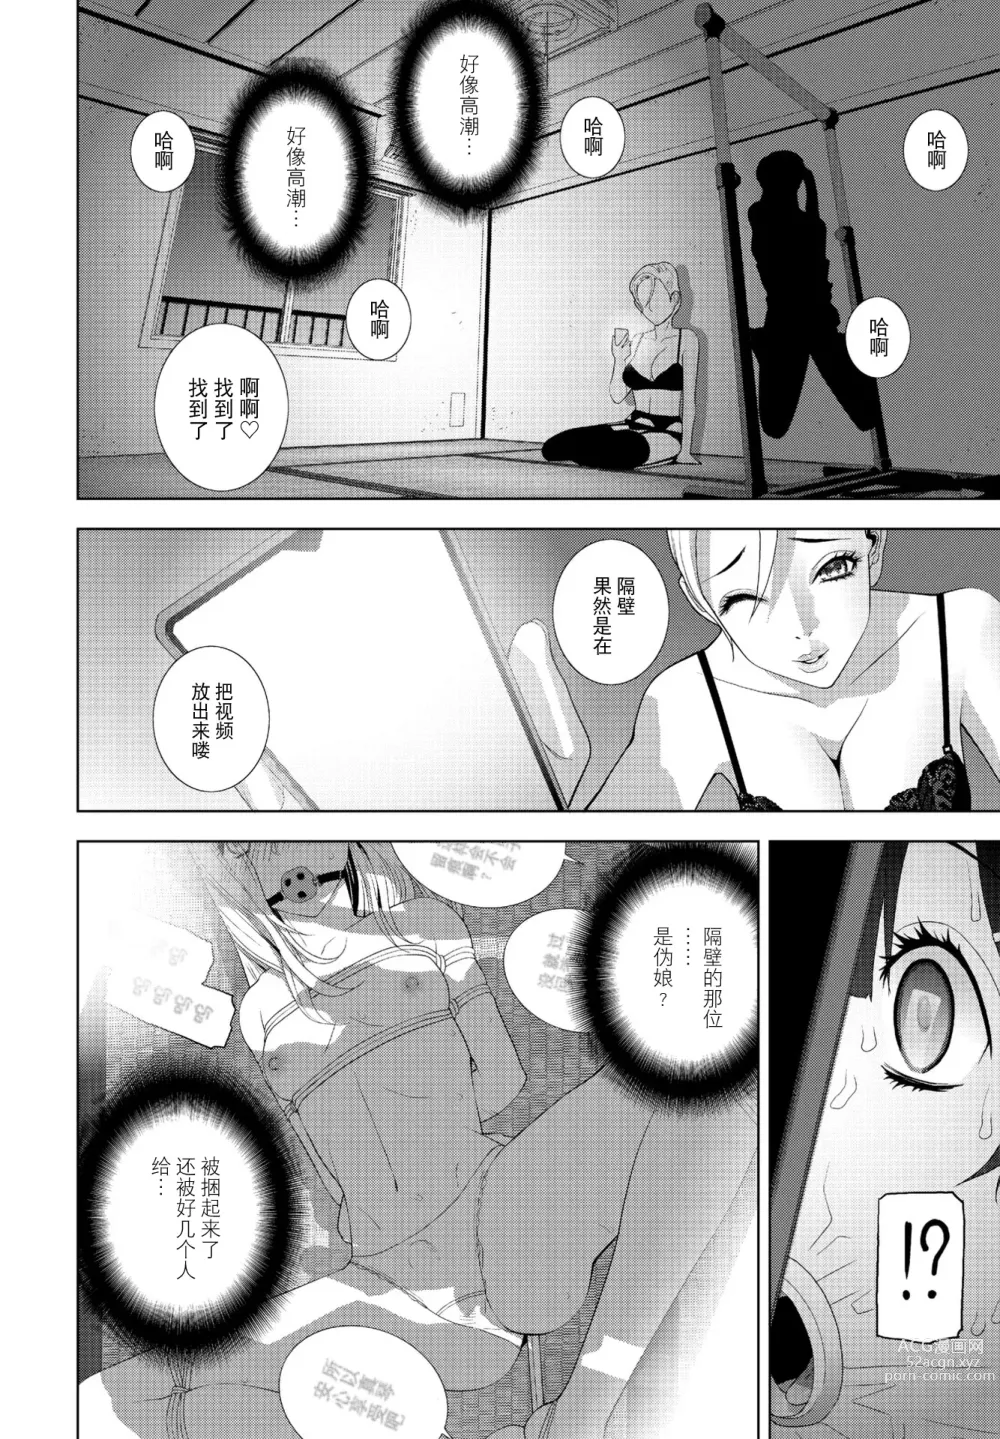 Page 10 of manga Imouto ni Chikau Hi